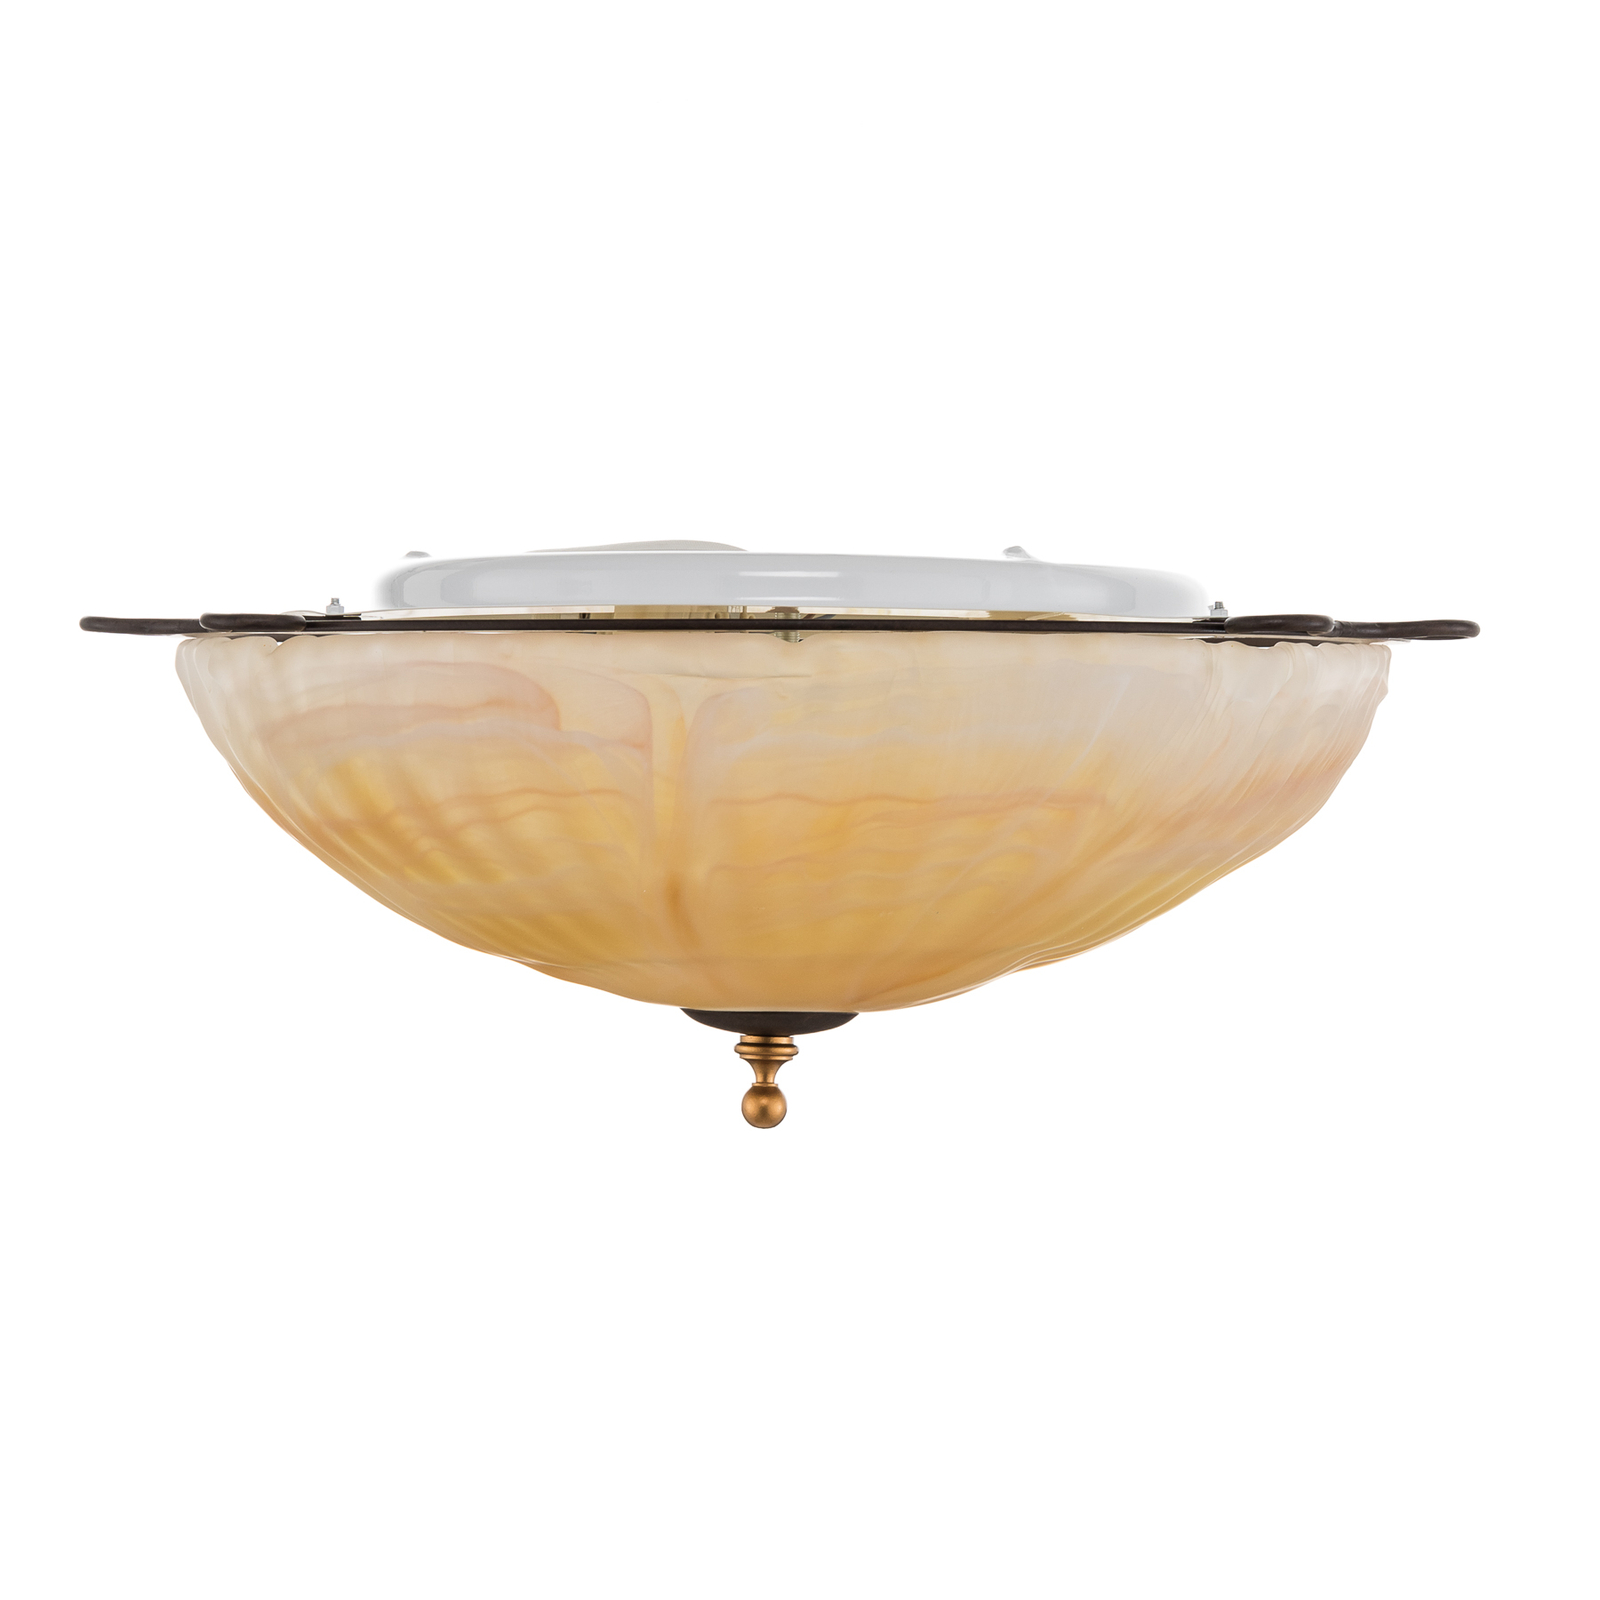 In antieke stijl vervaardigd - plafondlamp Armelle